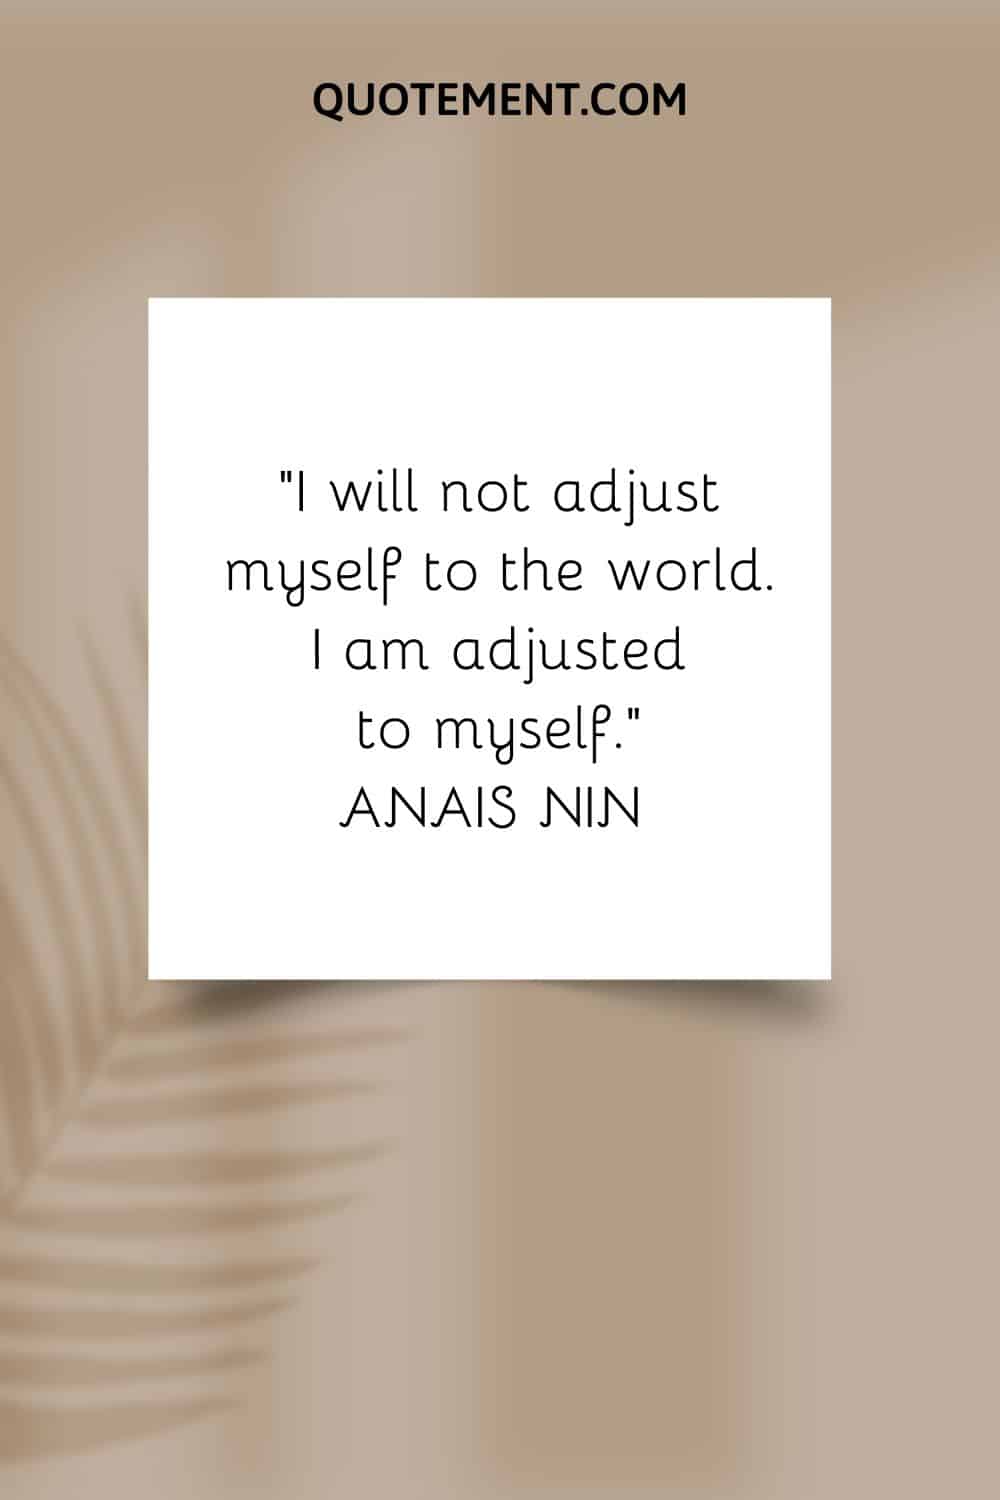 “I will not adjust myself to the world. I am adjusted to myself.” — Anais Nin